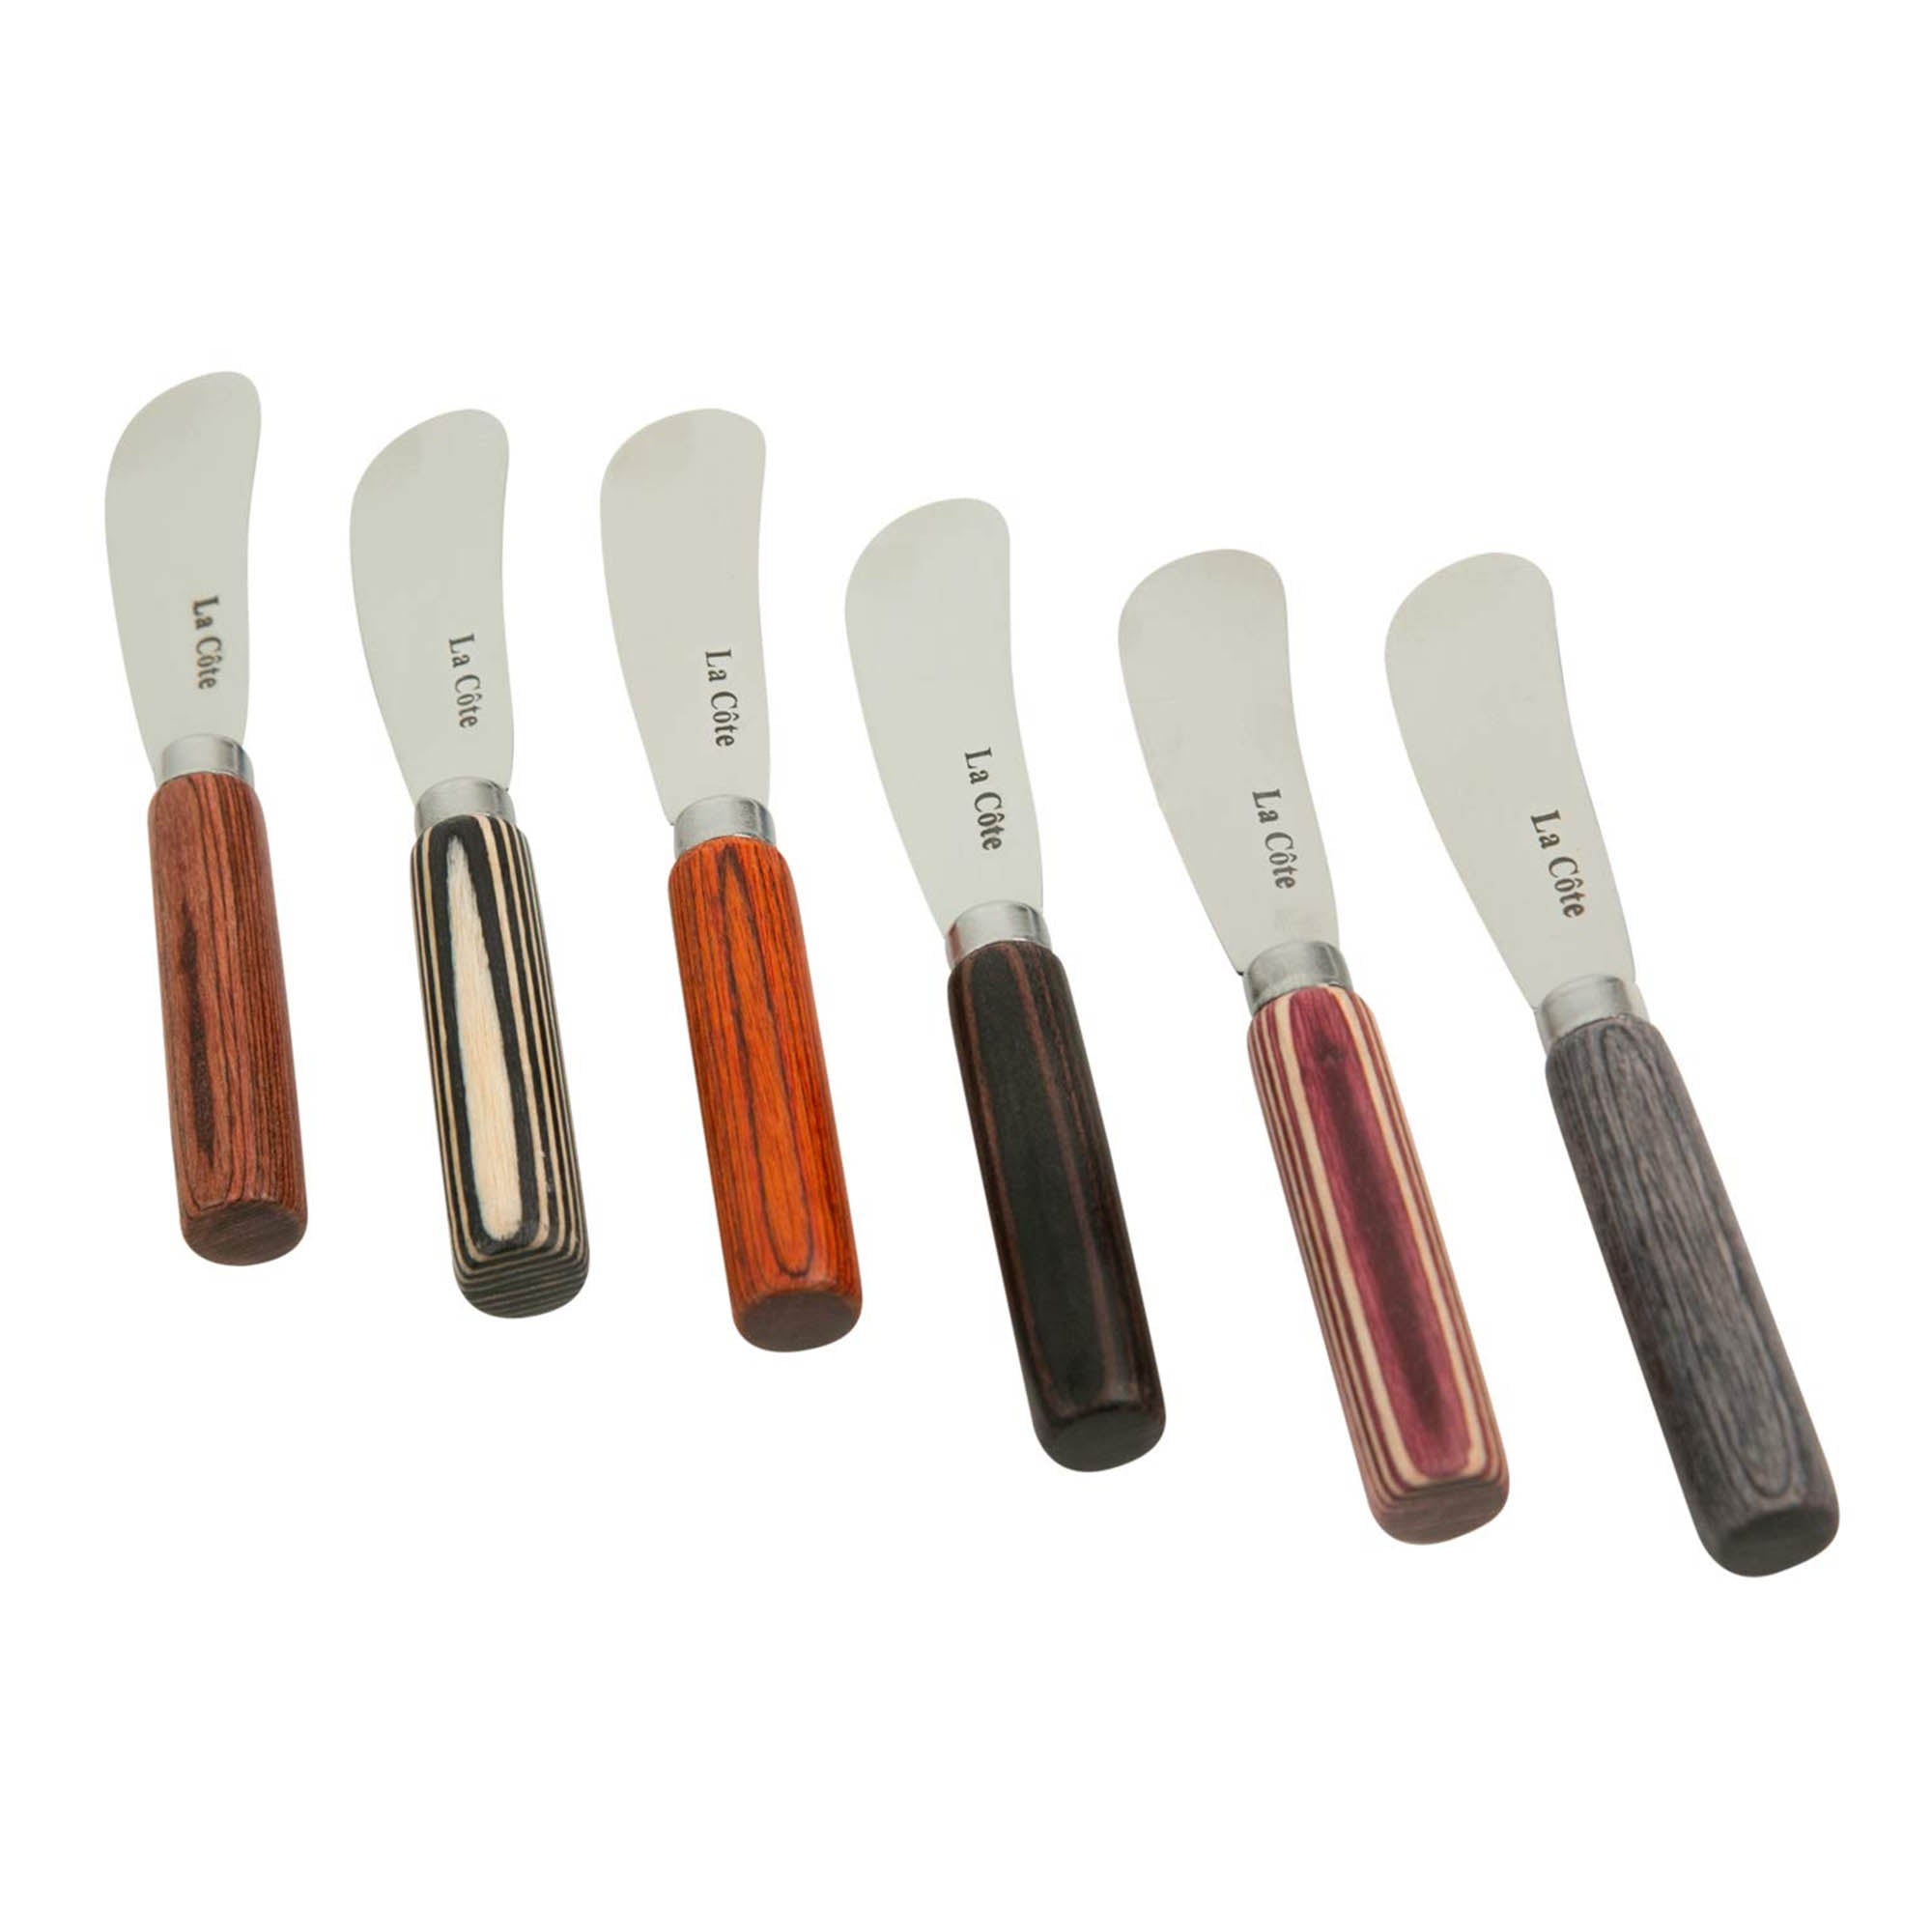 La Cote 6 Piece Cheese Knife Spreader Set 18/10 Stainless Steel Blade Pakka Wood Handle (5 Inch)